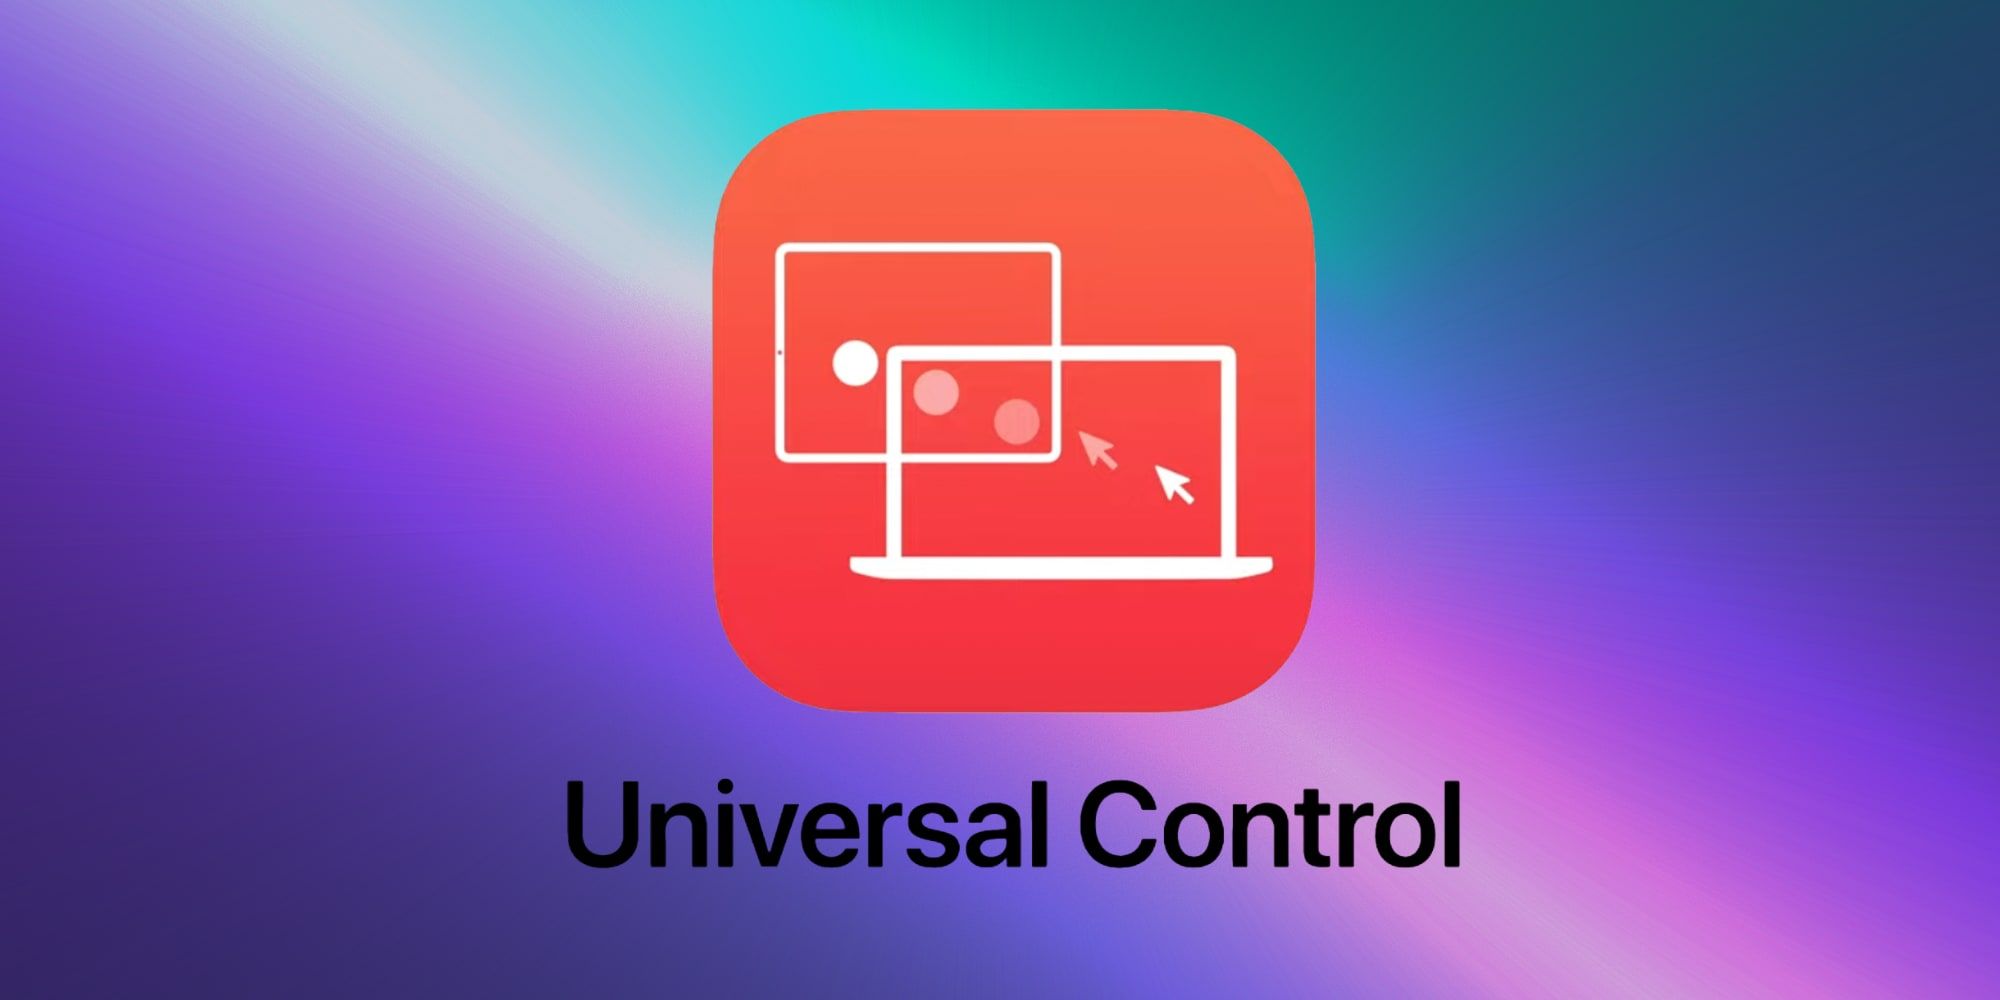 Apple Universal Control Logo For Mac And iPad